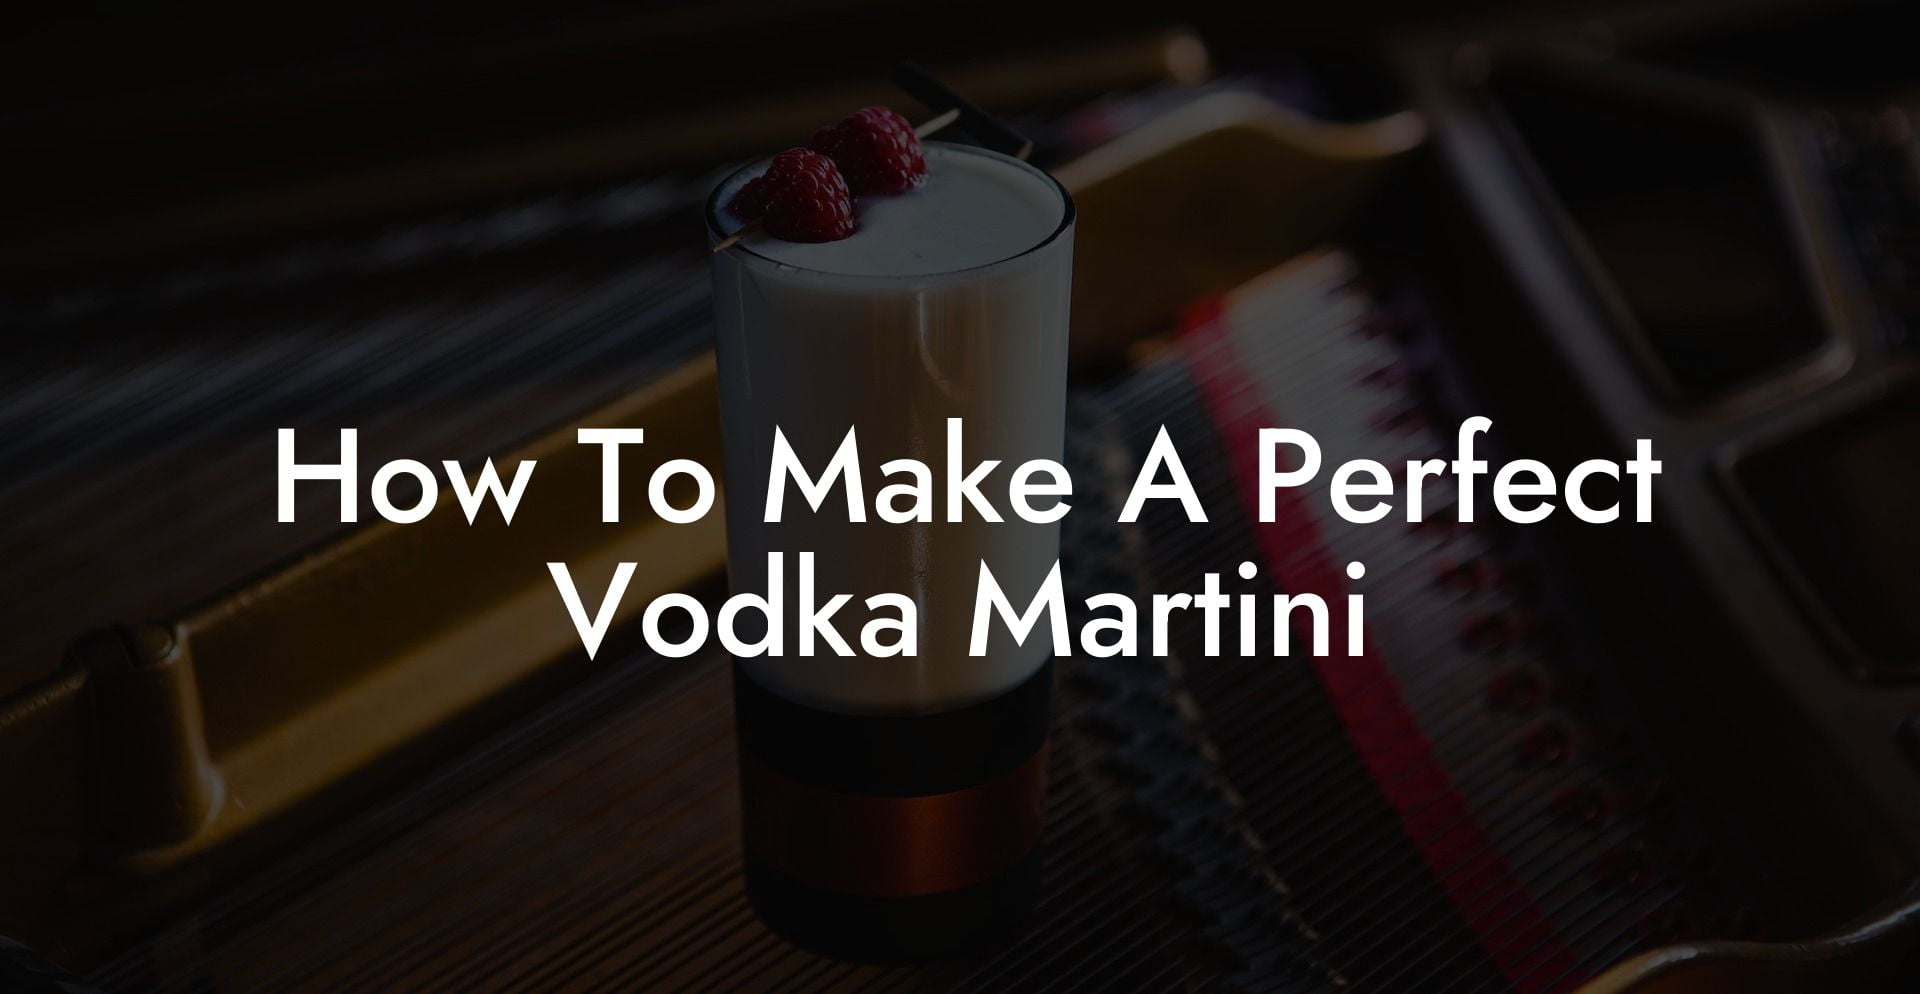 How To Make A Perfect Vodka Martini